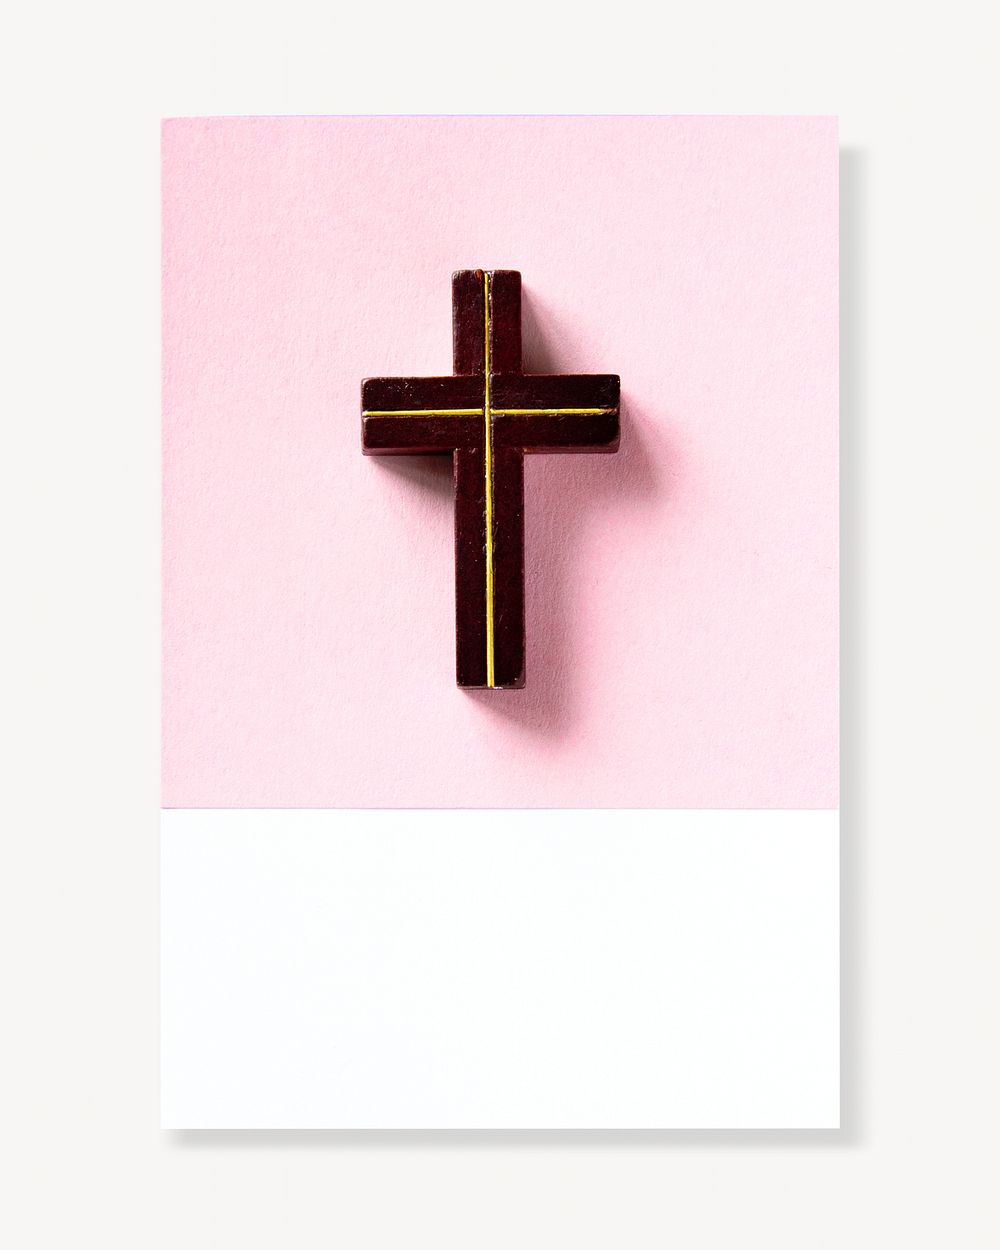 Christian cross isolated design